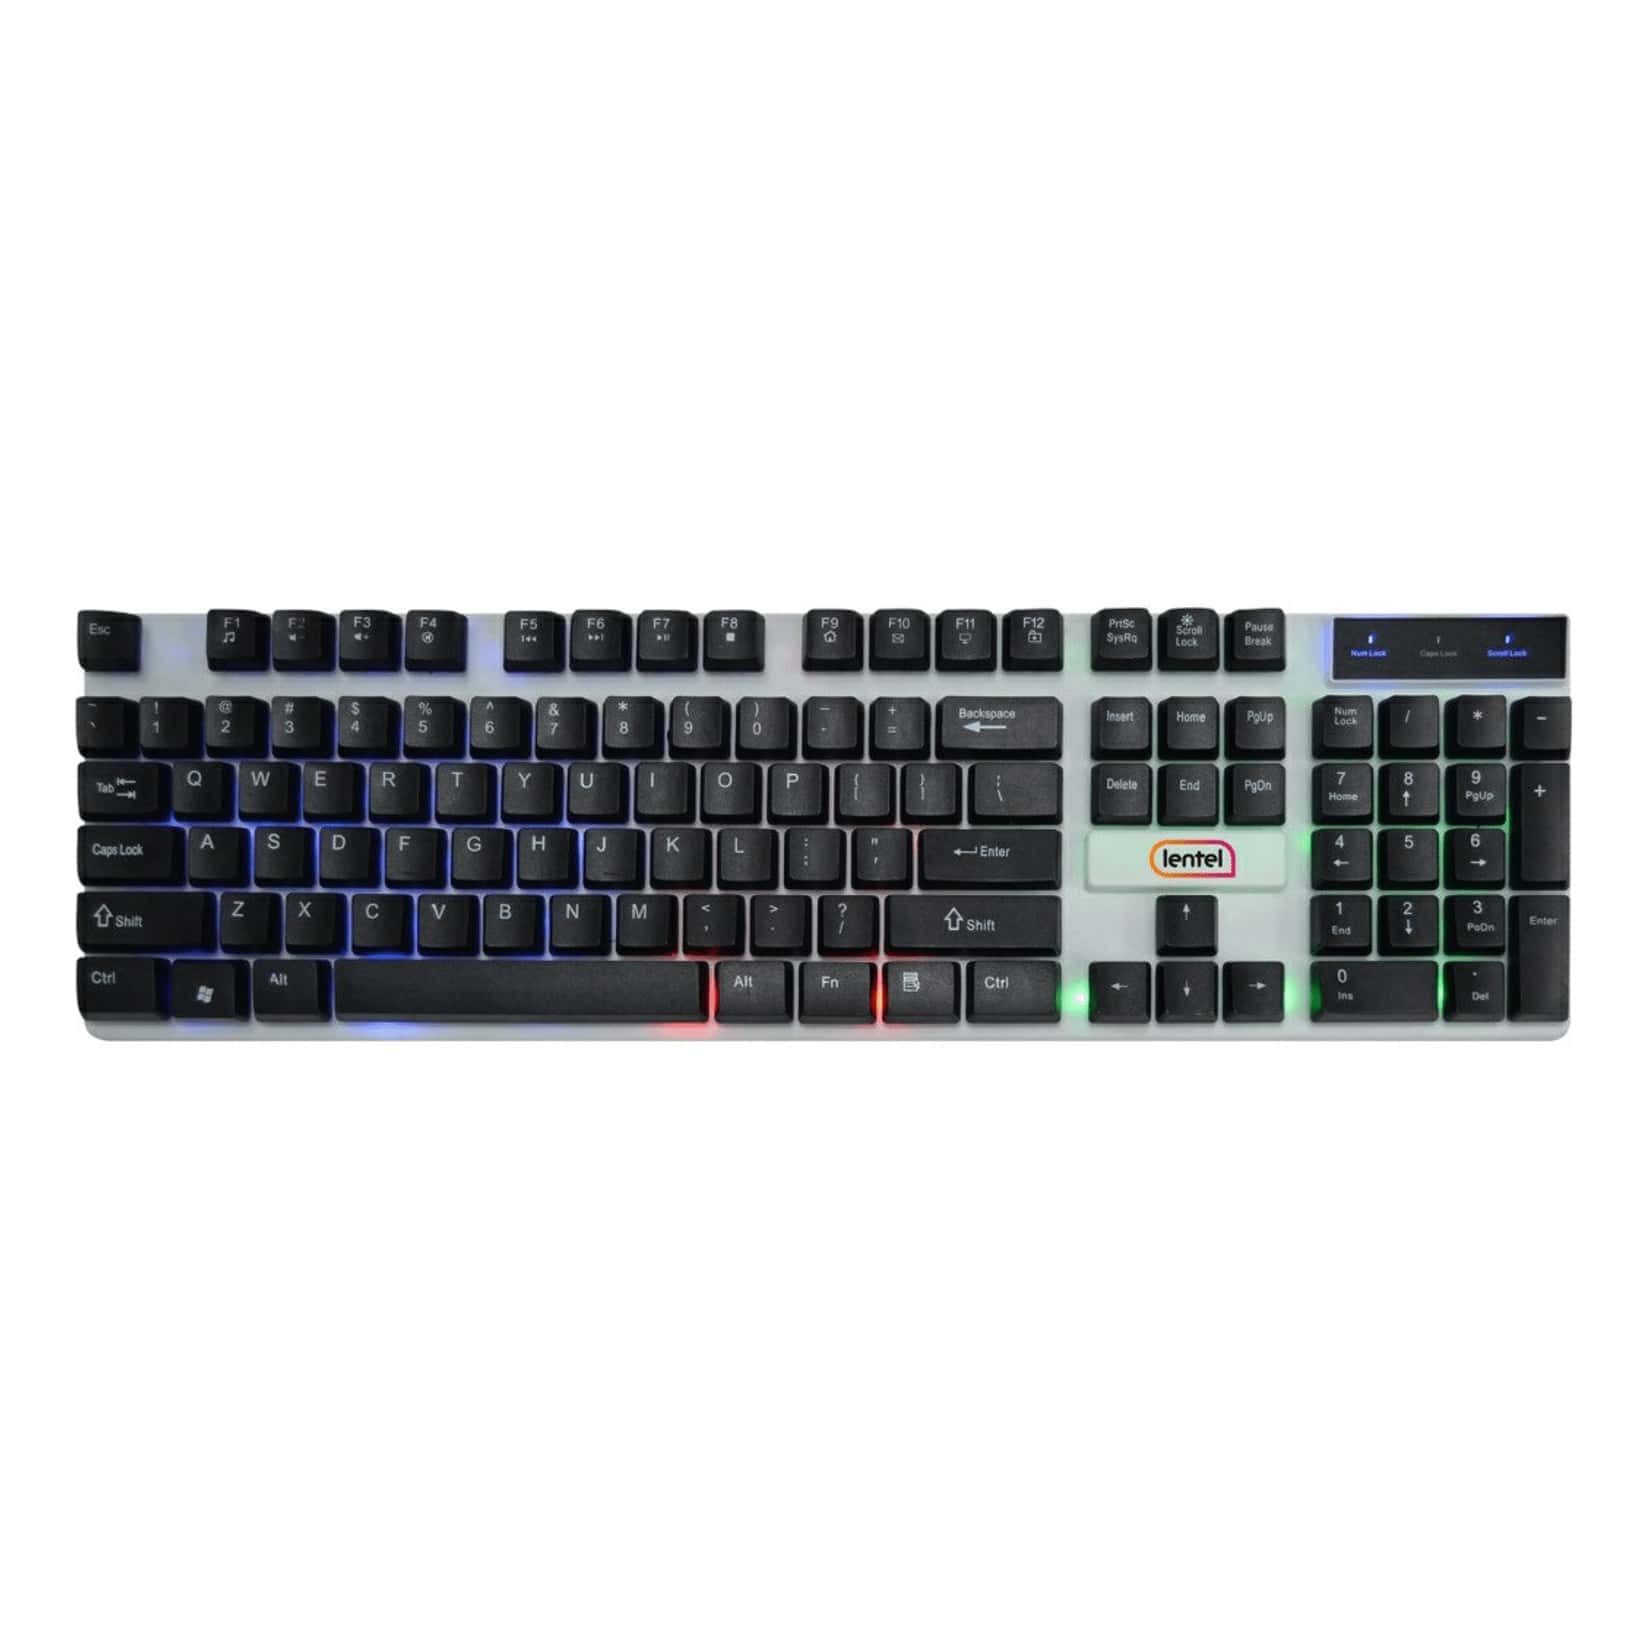 Проводная клавиатура Lentel TS-NEP14 Black - отзывы покупателей на маркетплейсе Мегамаркет | Артикул: 100030713133